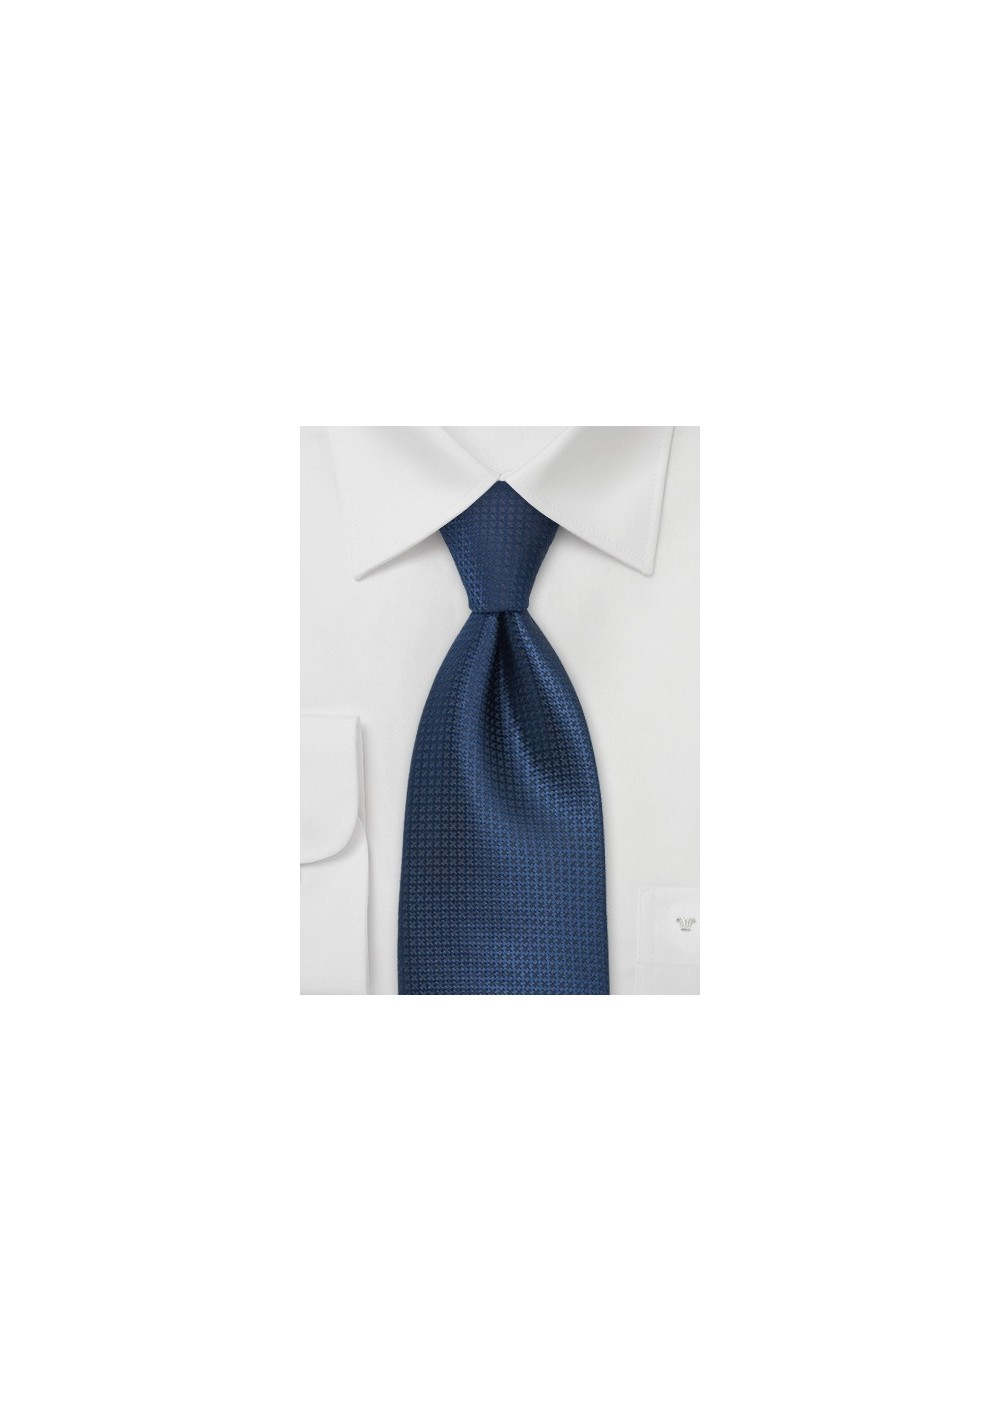 Textured Tie in Blue Made in Kids Size